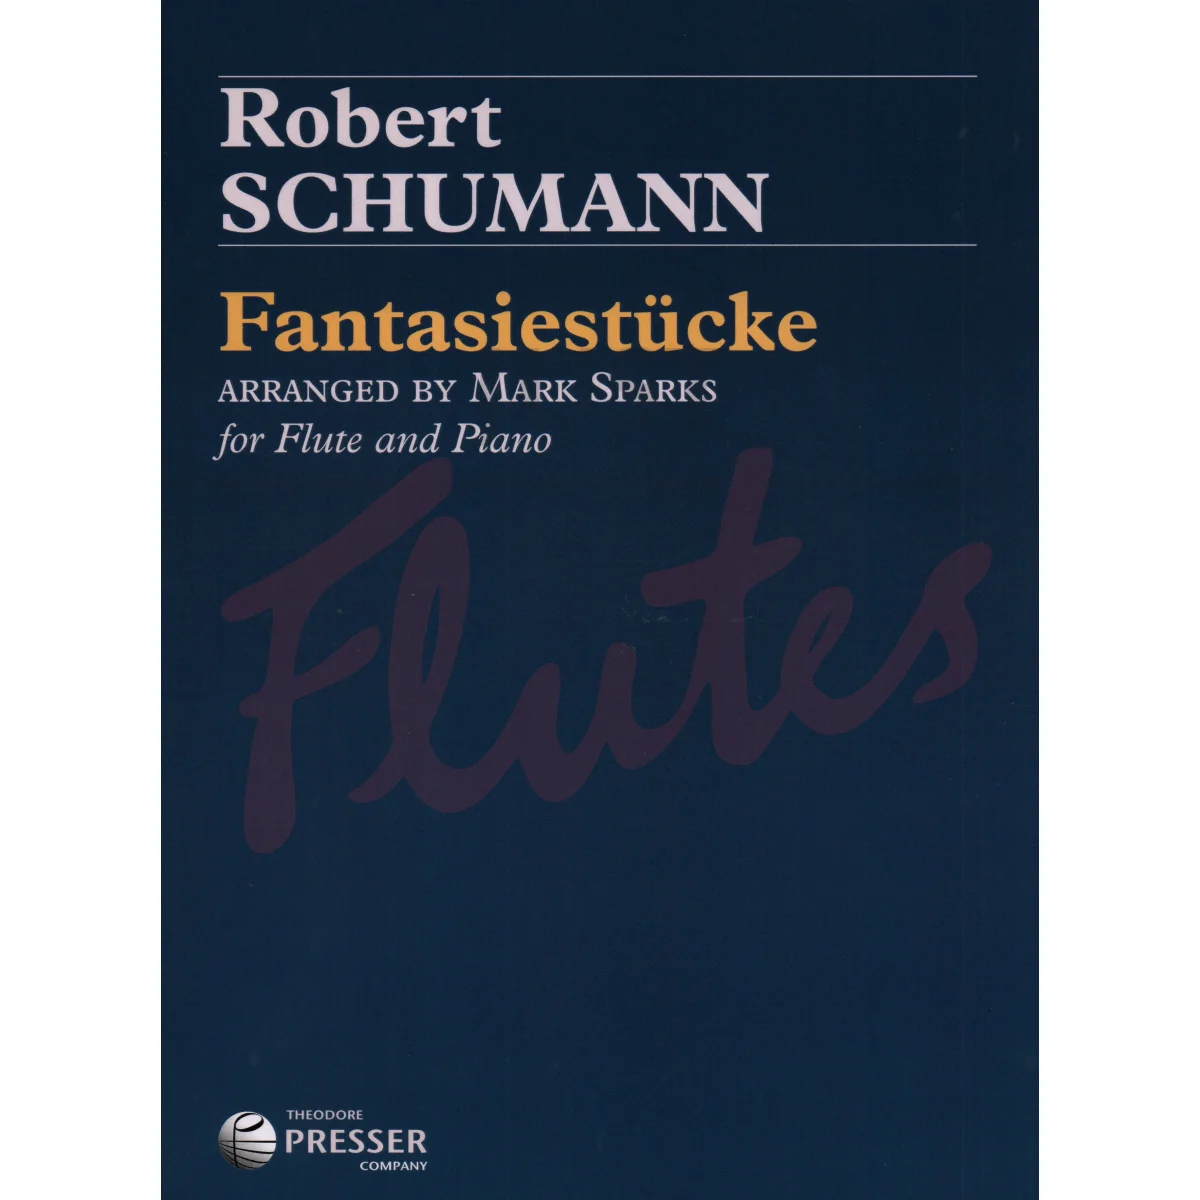 Fantasiestücke arranged for Flute and Piano